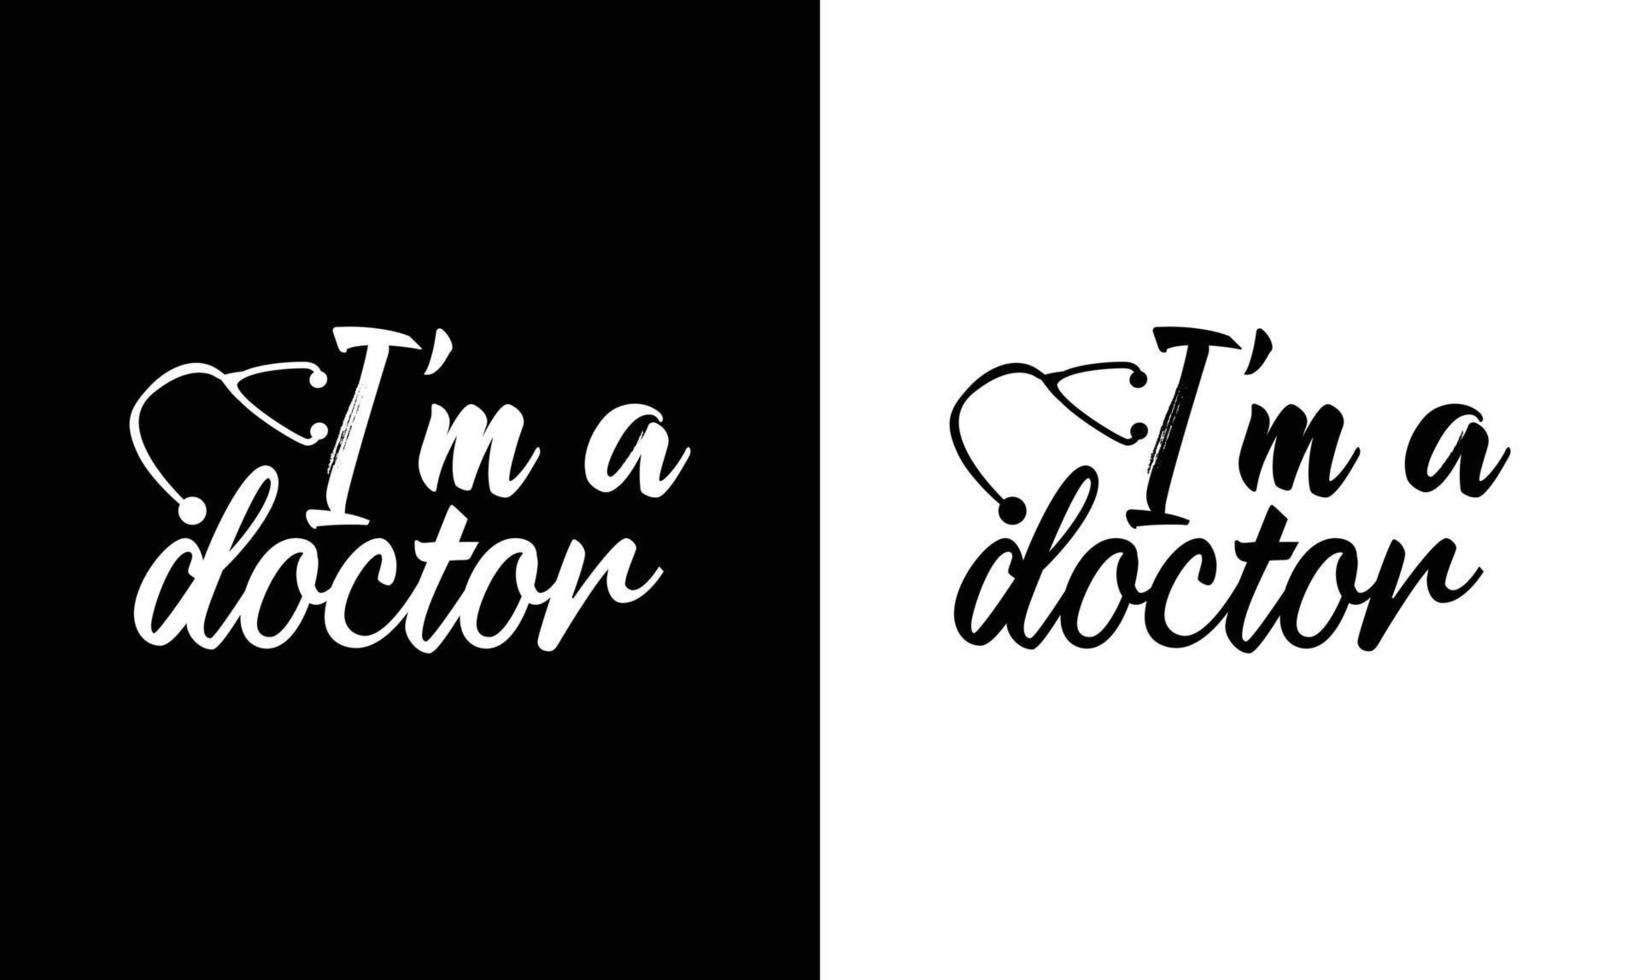 Arzt-Zitat-T-Shirt-Design, Typografie vektor